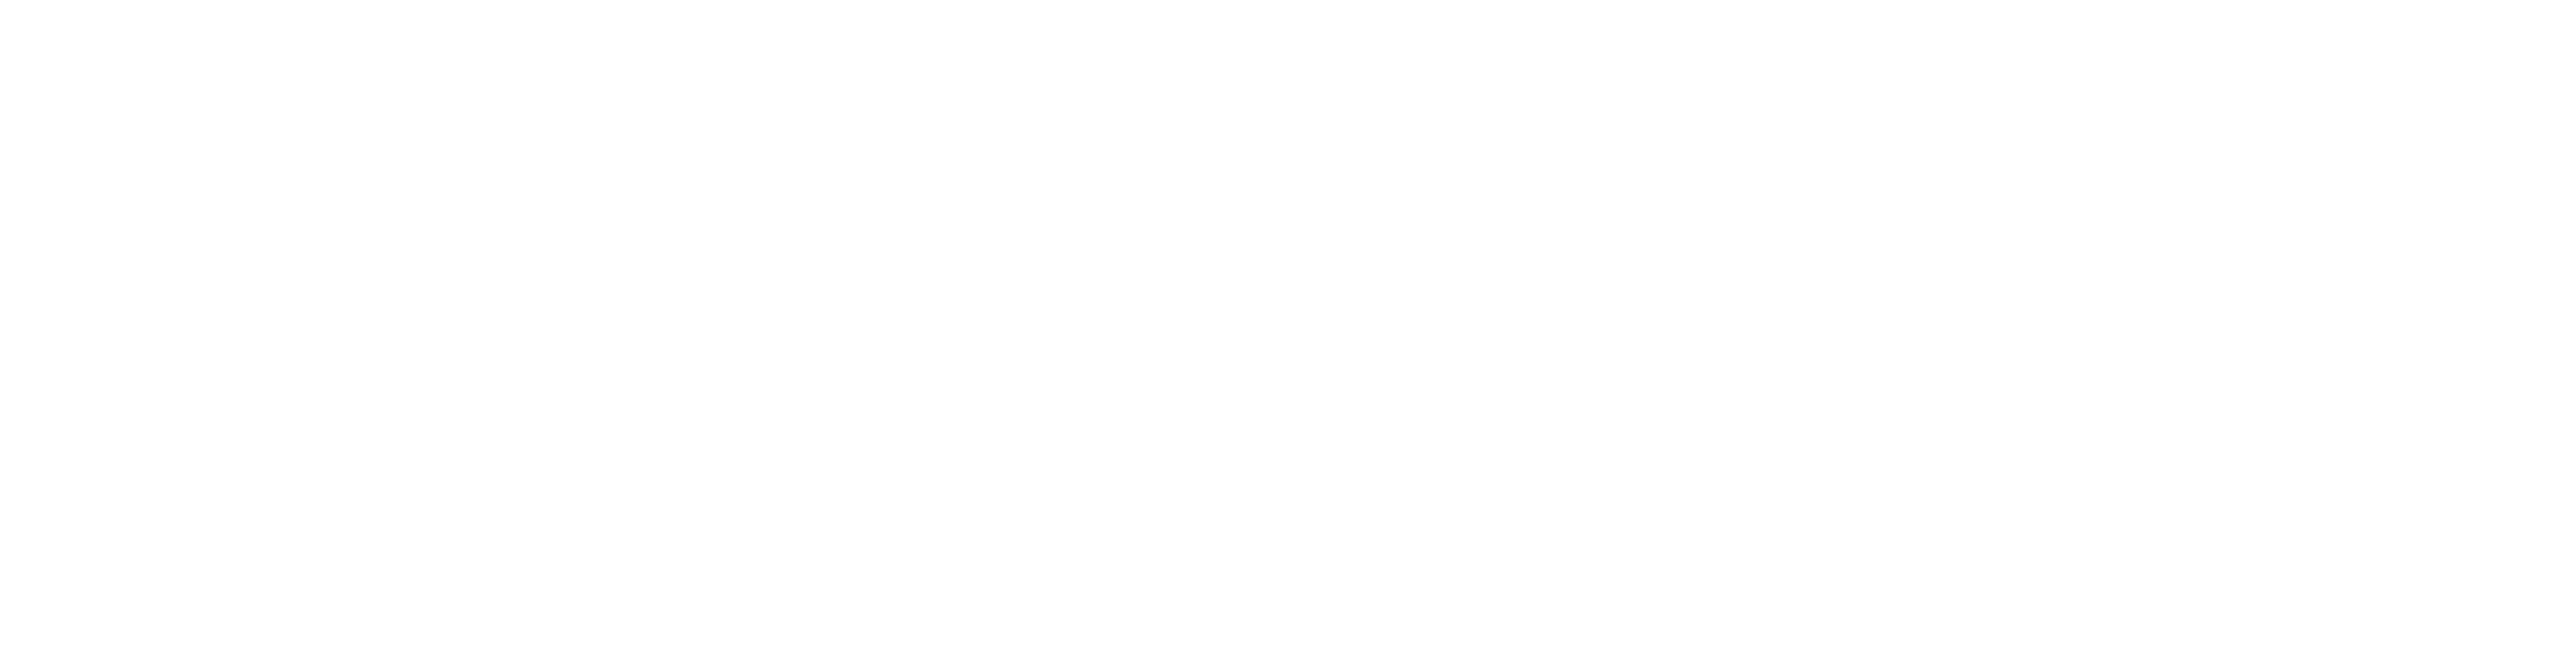 Oregon Department of Human Services Intellectual/Developmental Disabilities